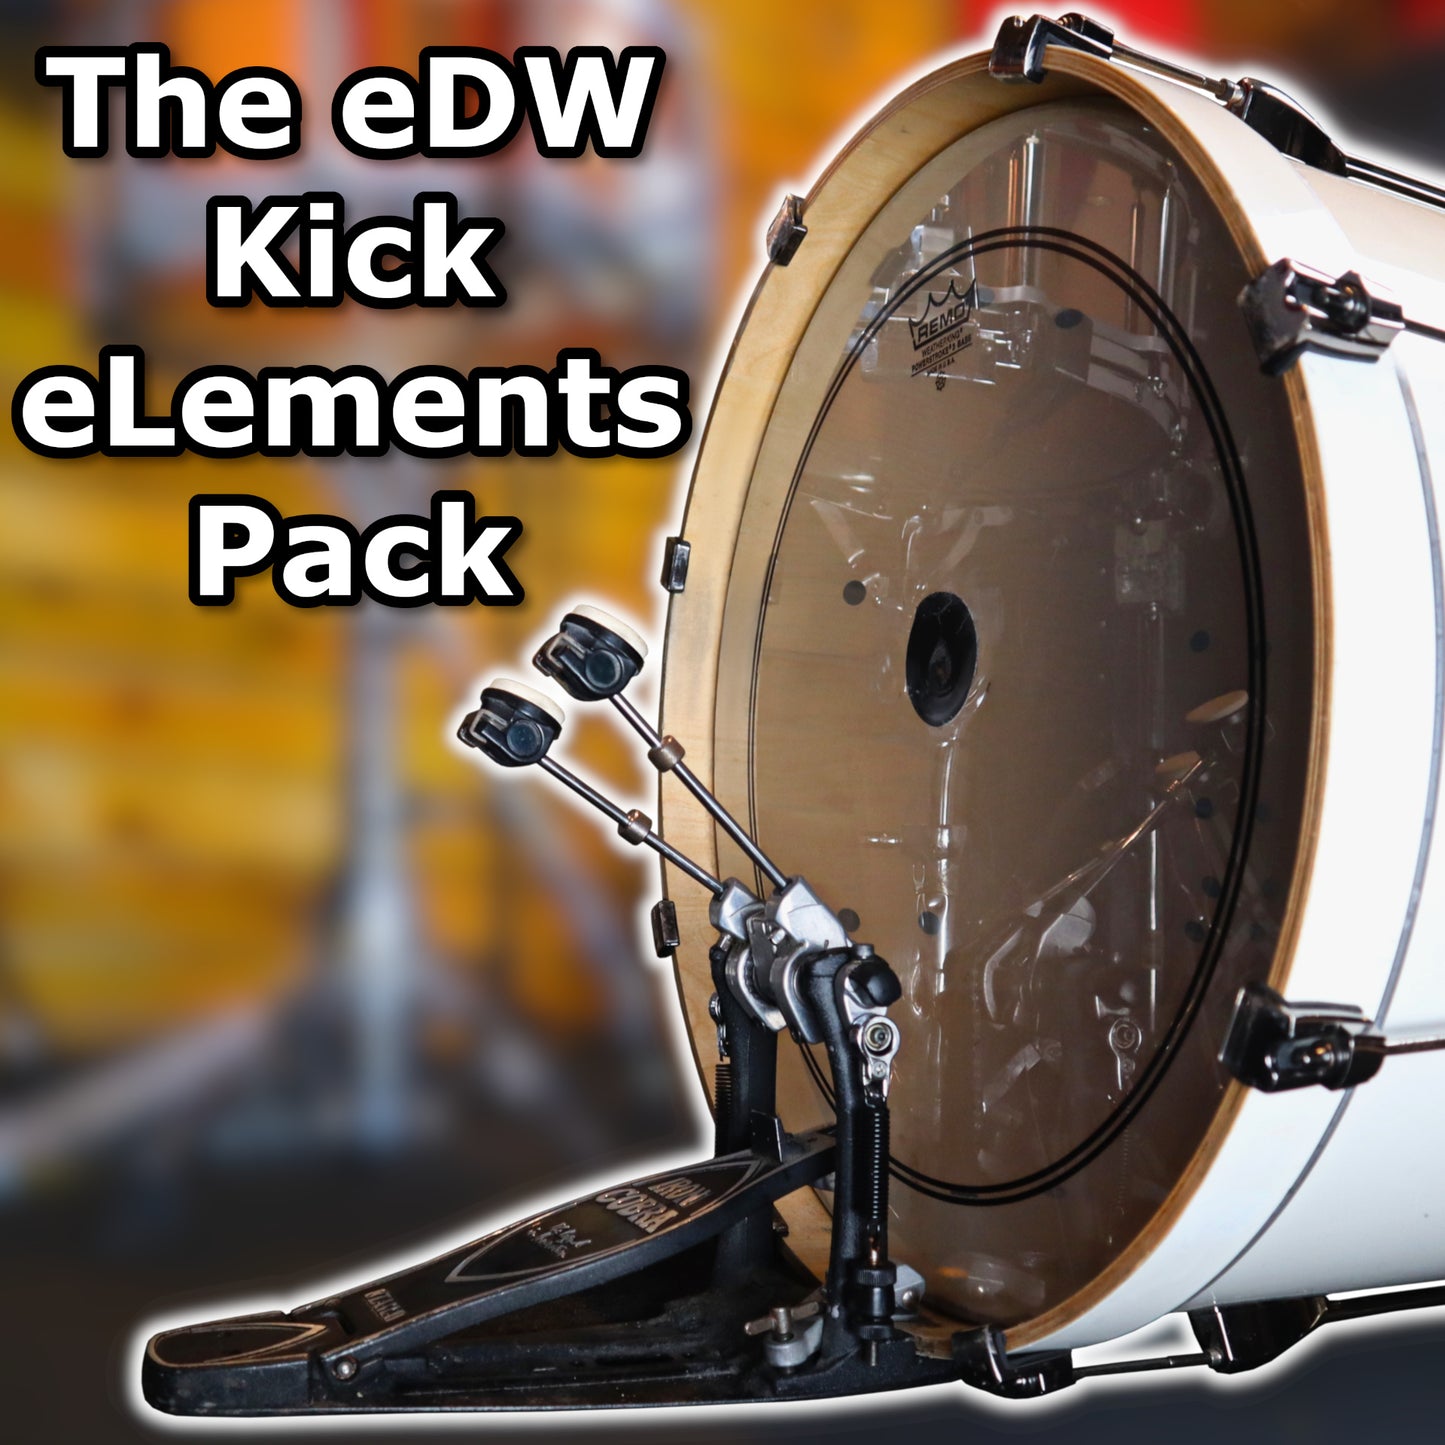 The eDW Kick eLements Pack